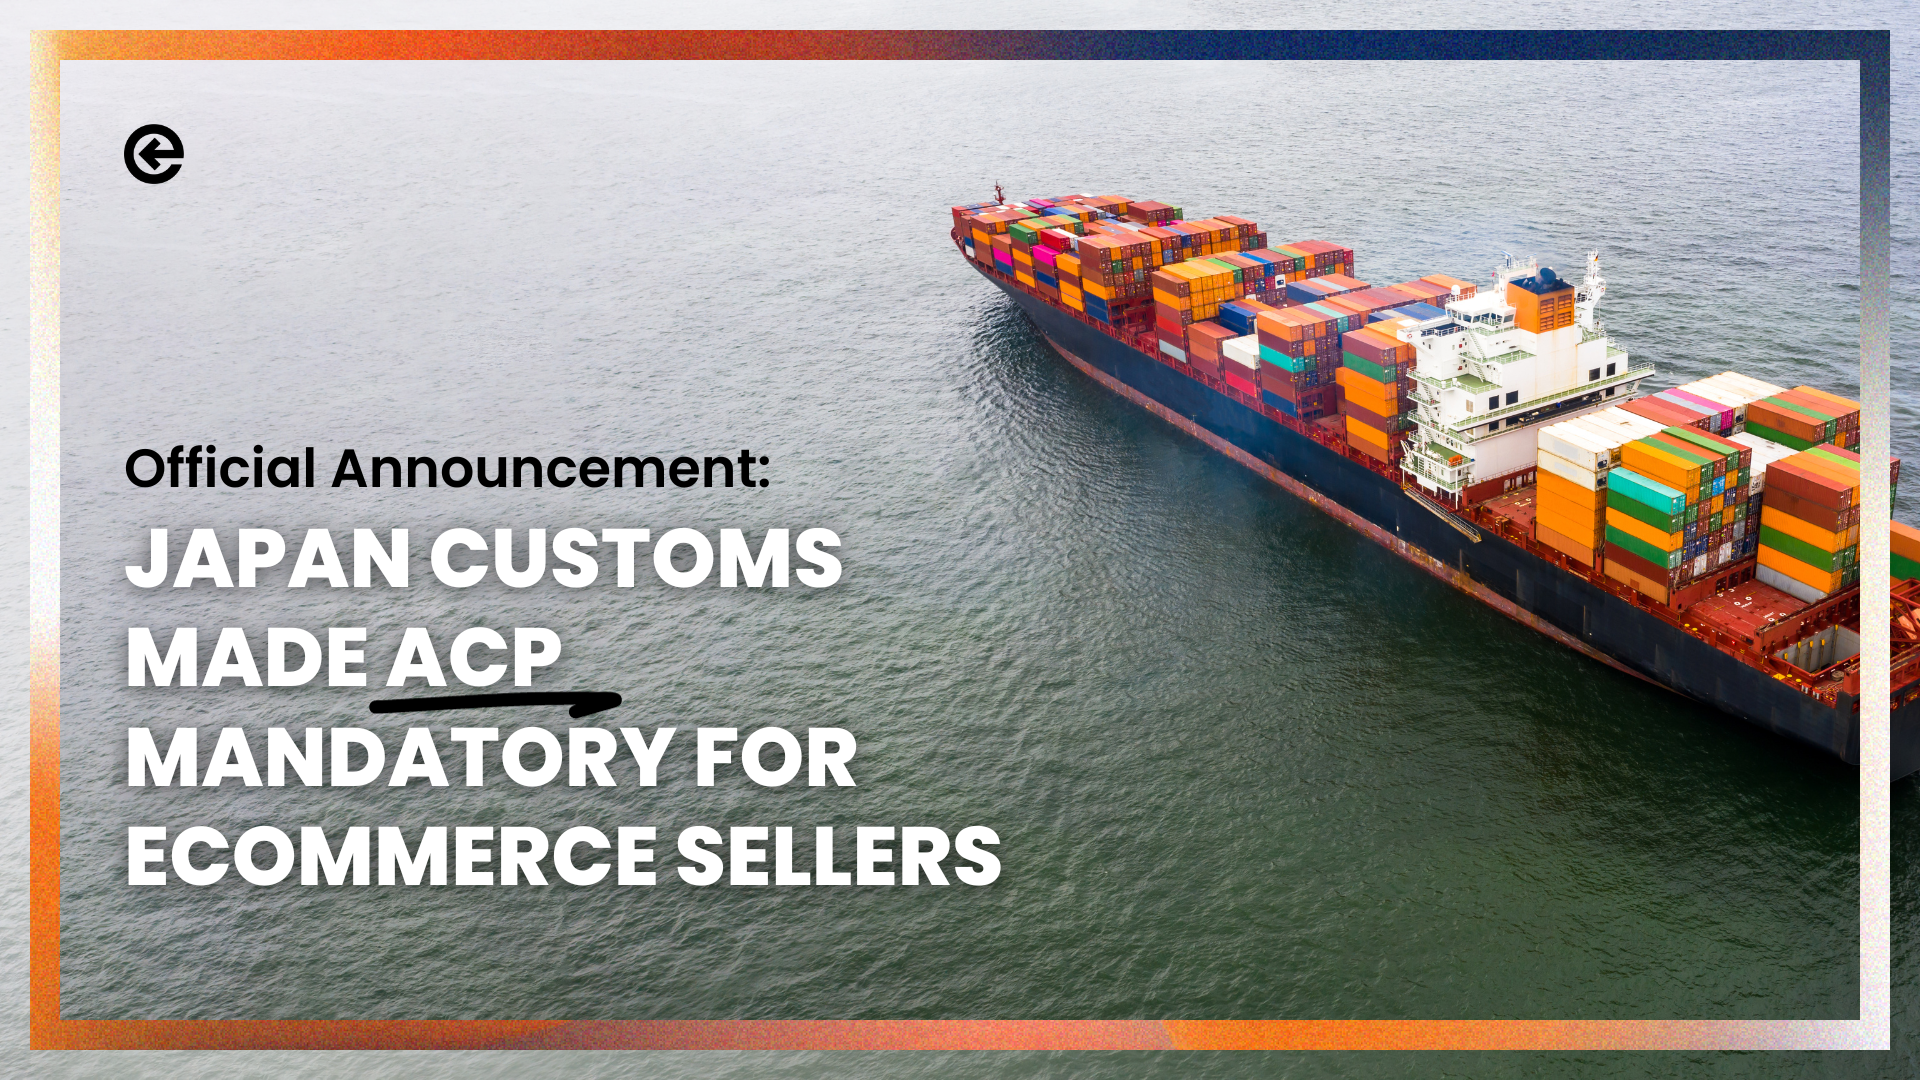 Japan Customs Made ACP Mandatory for eCommerce Sellers